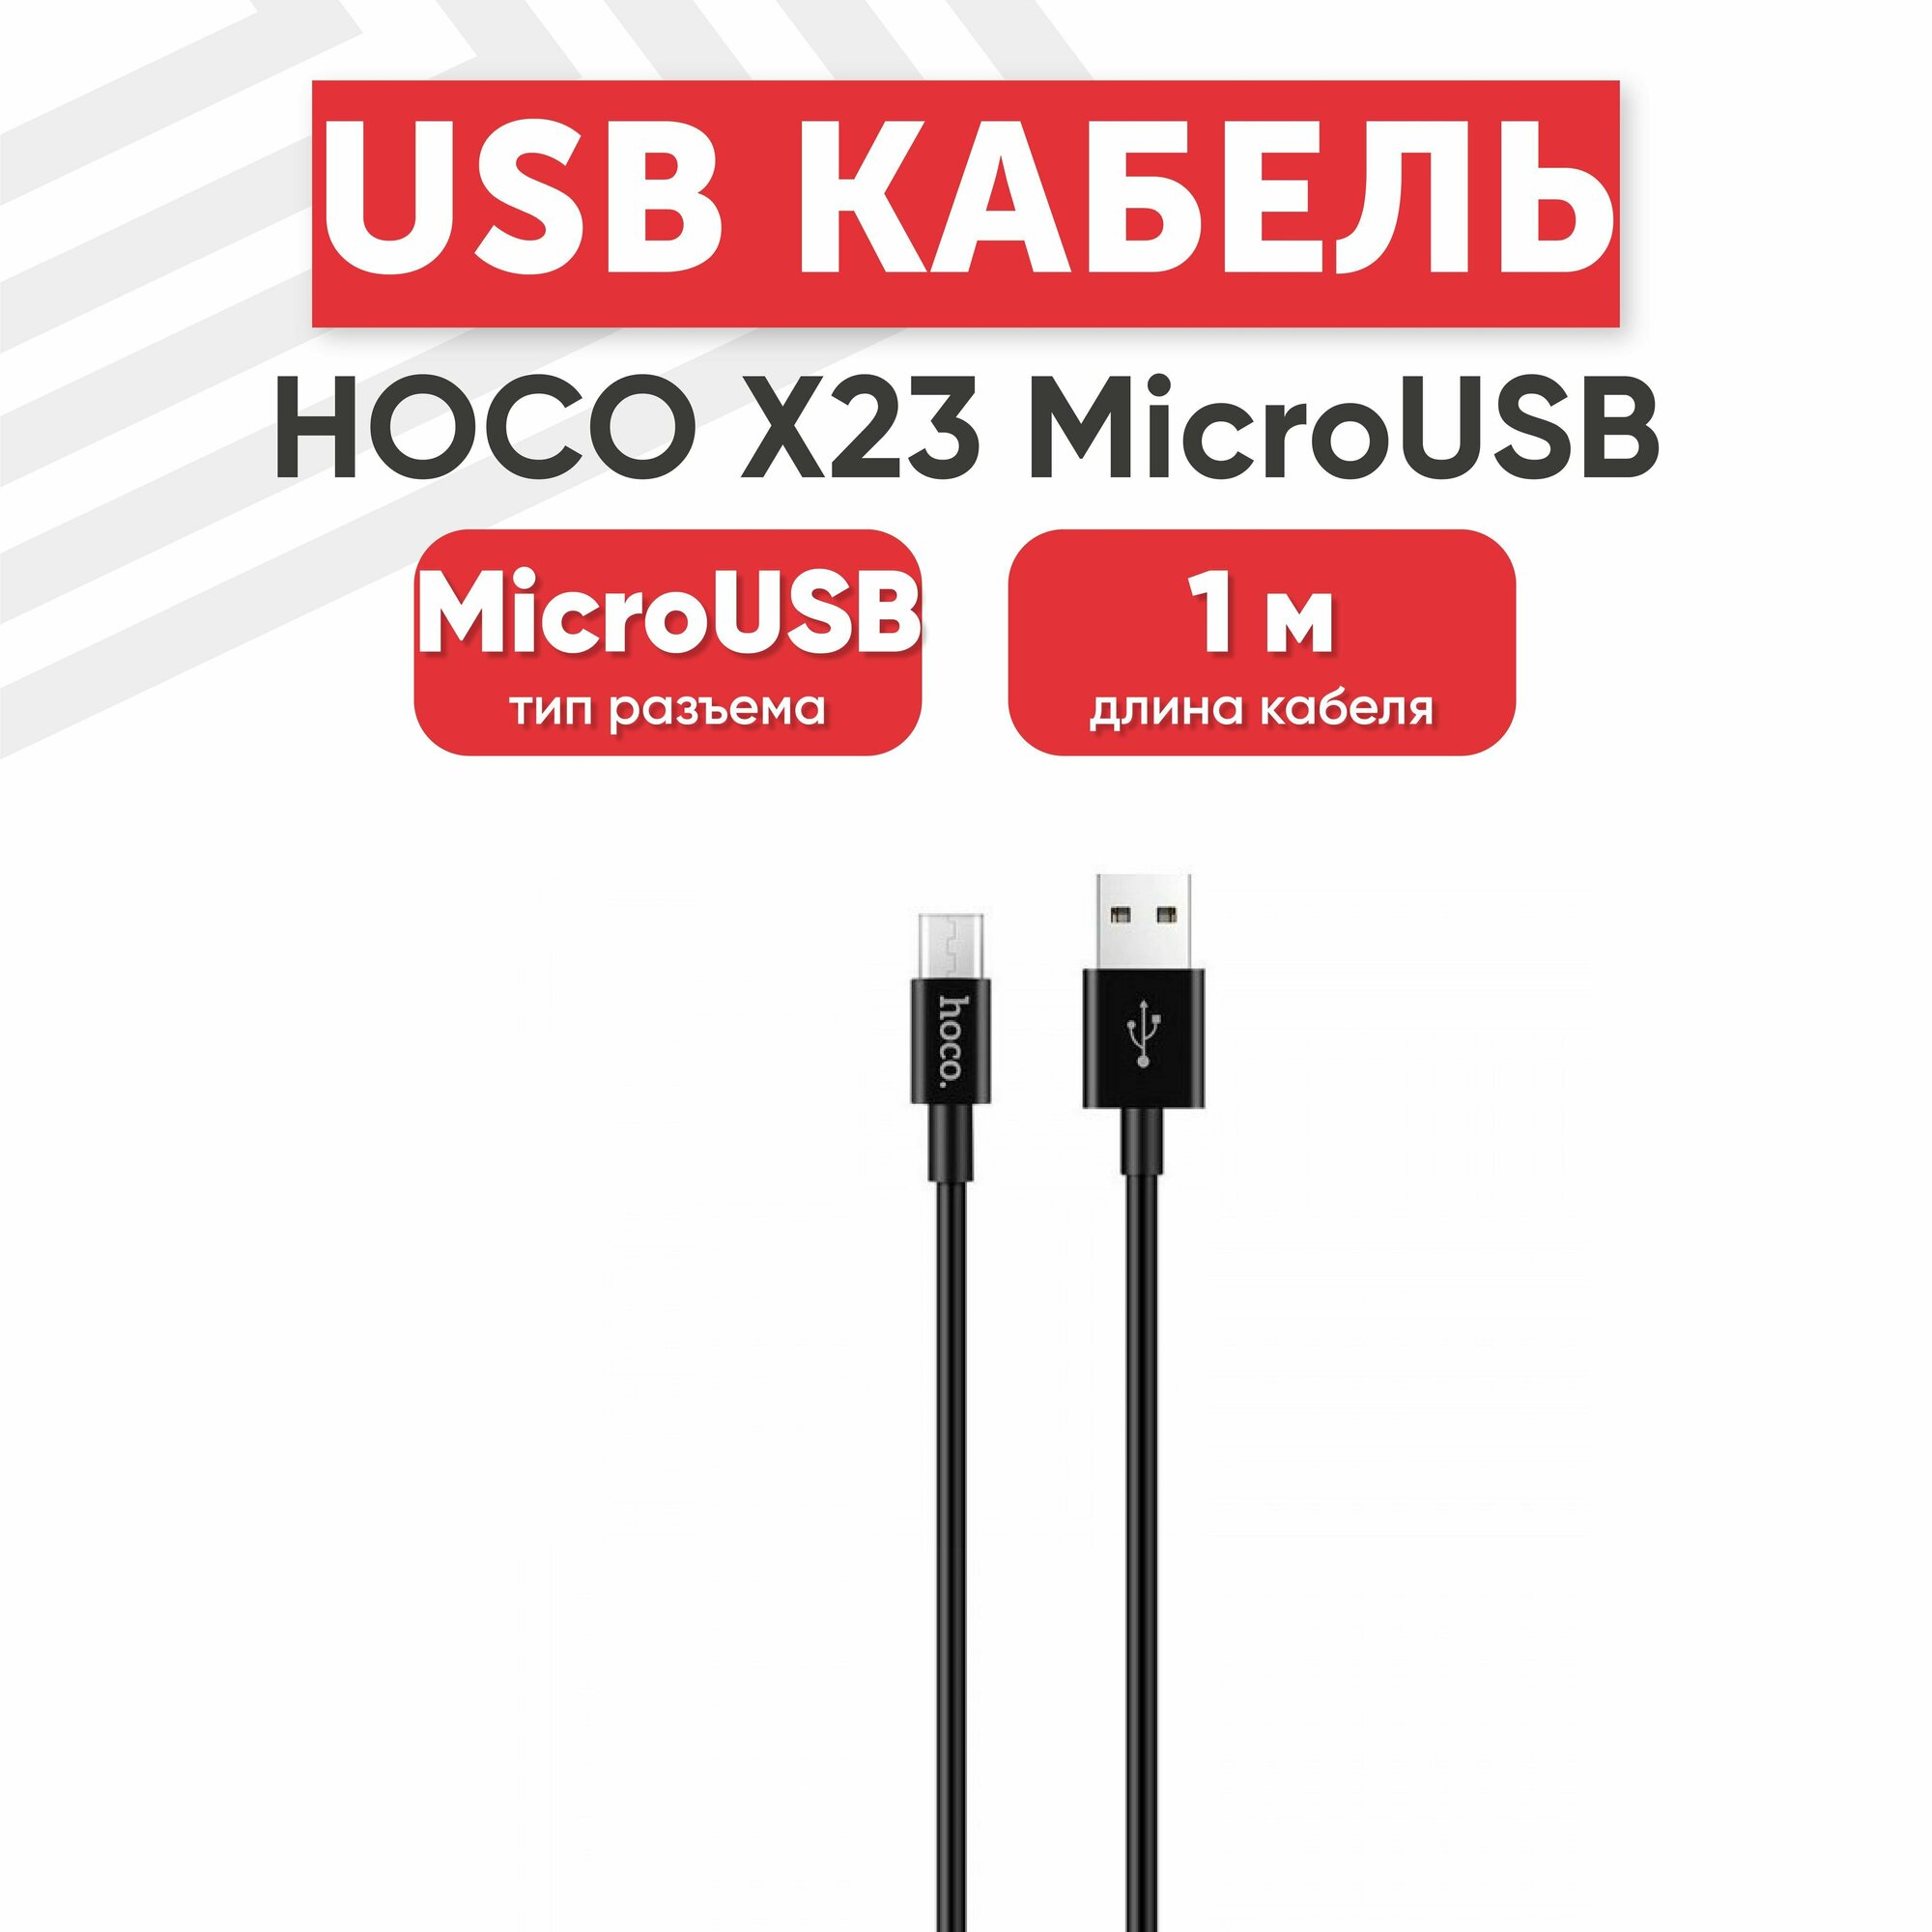 USB кабель Hoco X23 для зарядки, передачи данных, MicroUSB, 2.4А, 1 метр, TPE, черный